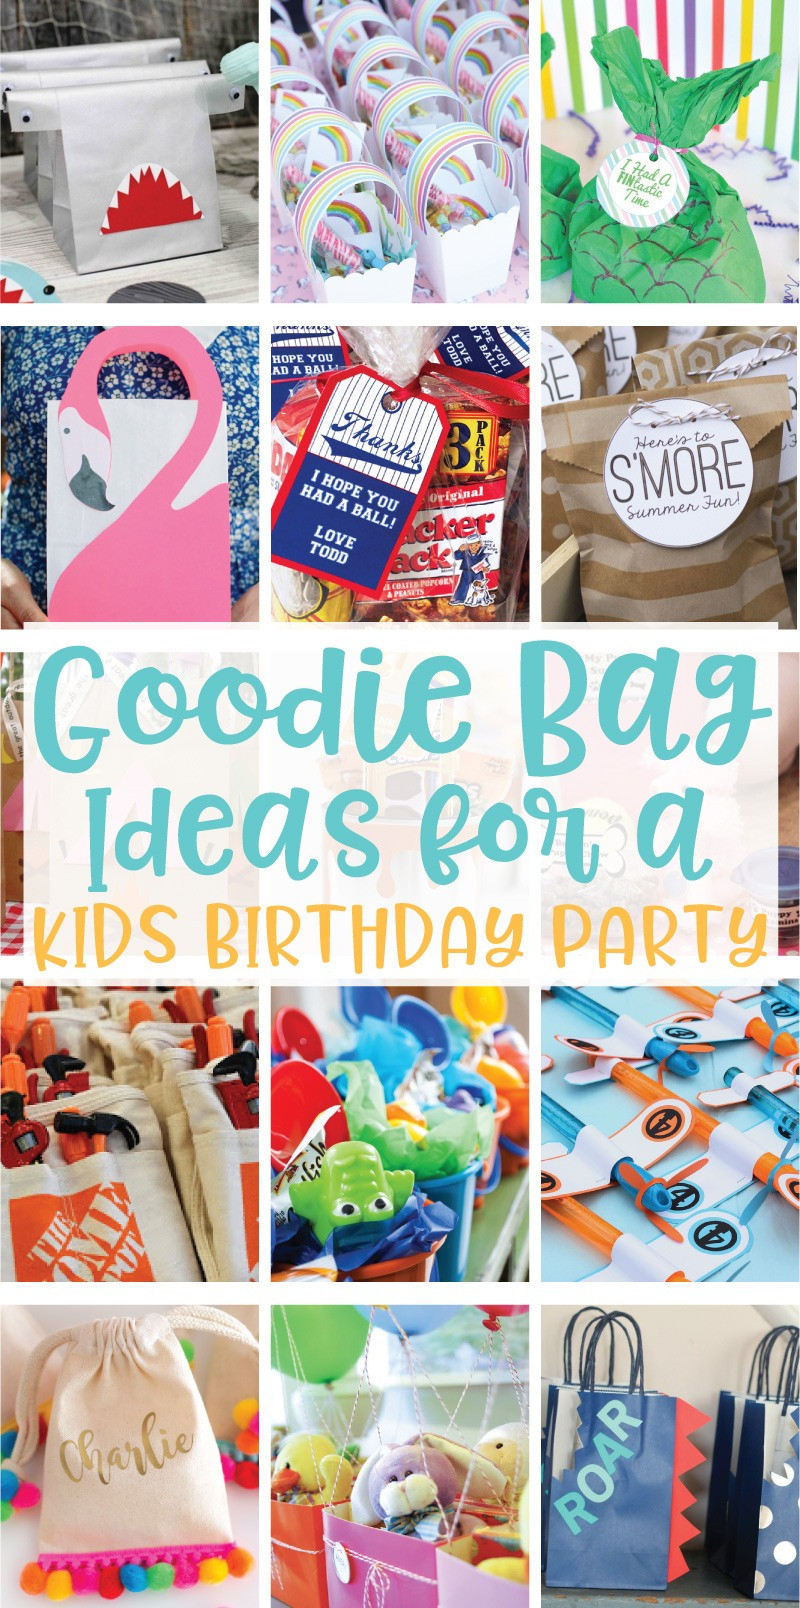 Birthday Gift Ideas For Kids
 20 Creative Goo Bag Ideas for Kids Birthday Parties on